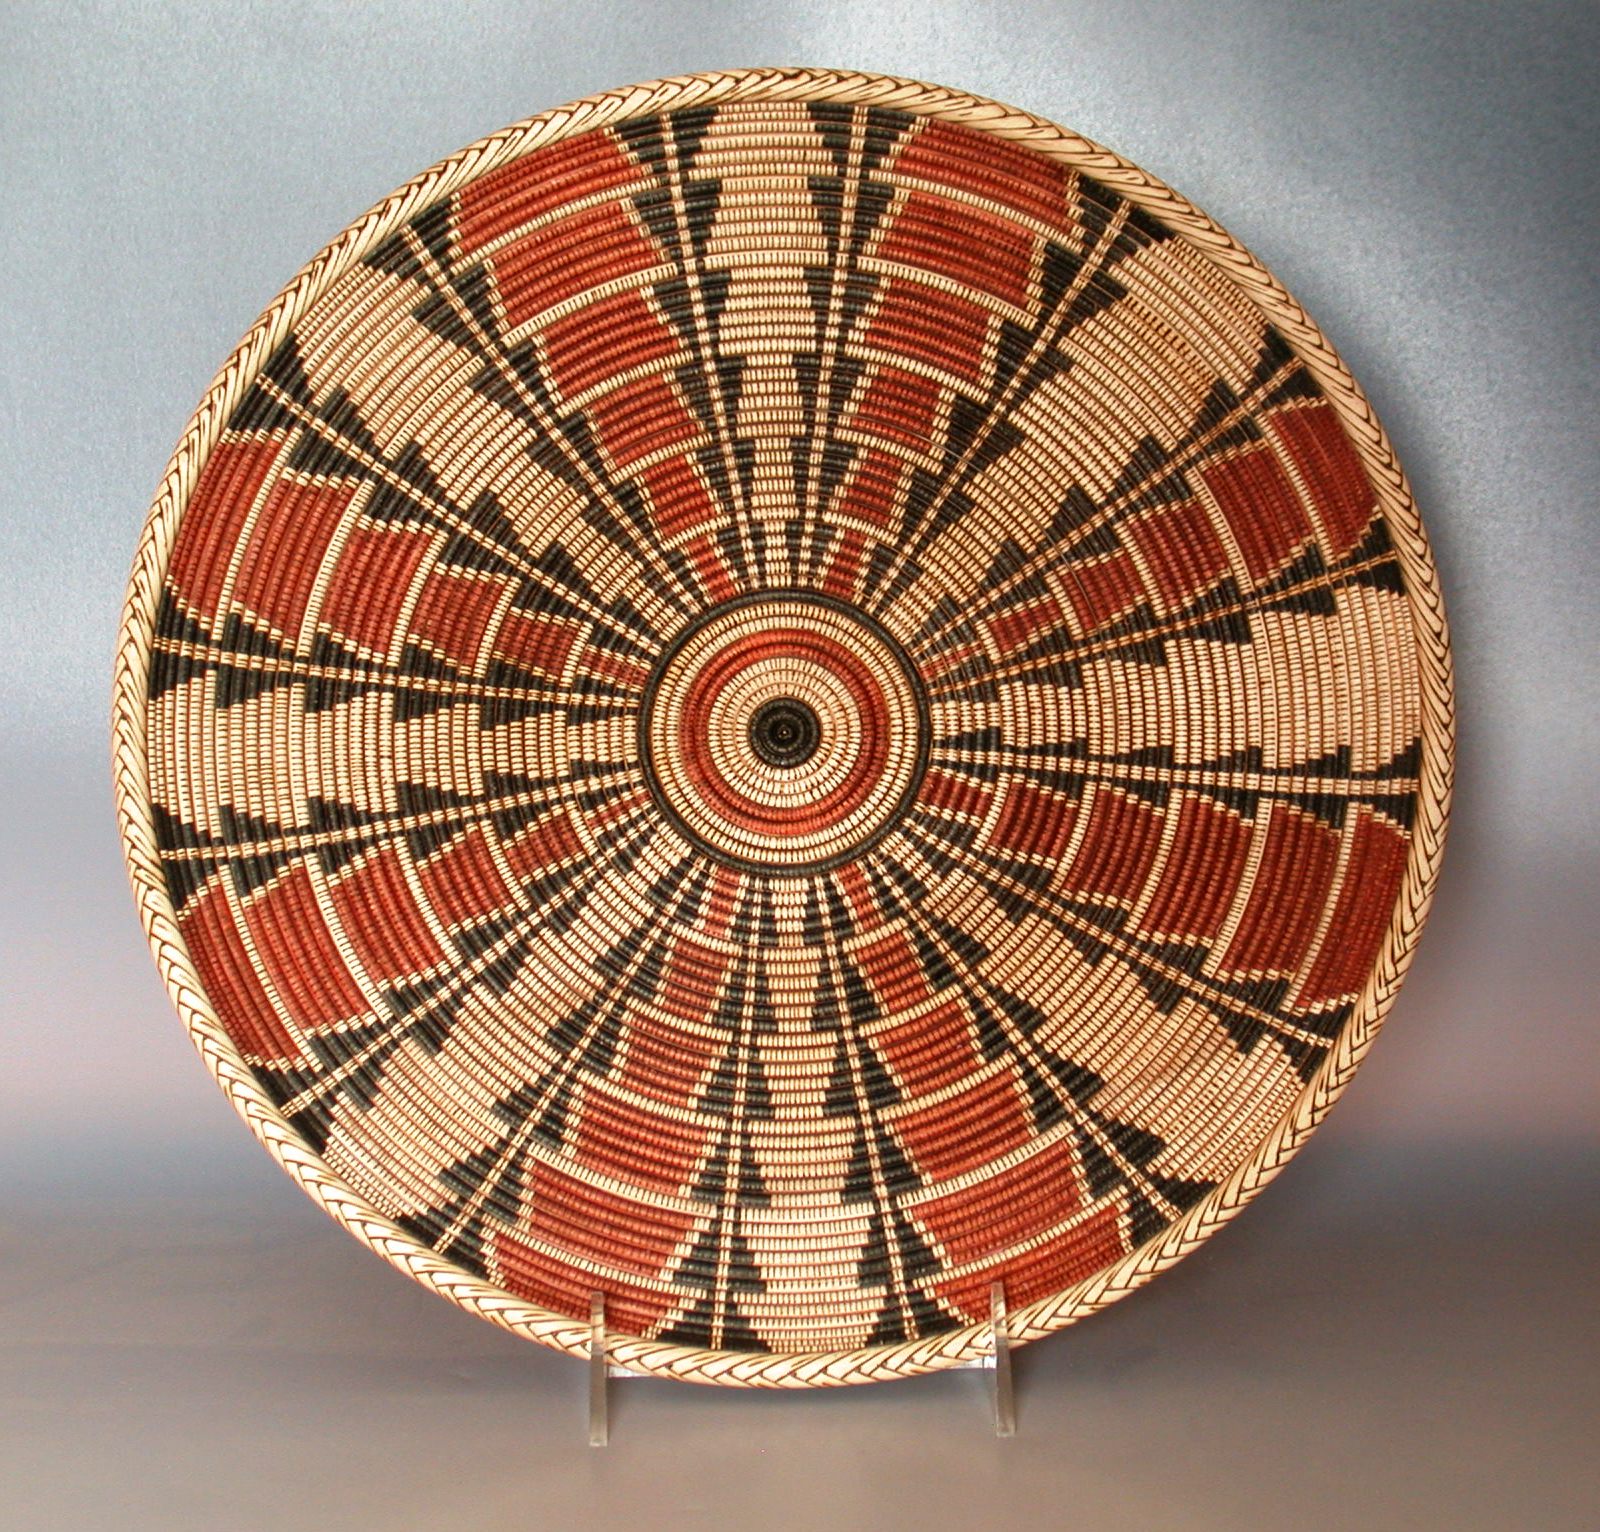 Panamint Shoshone Indian Basket